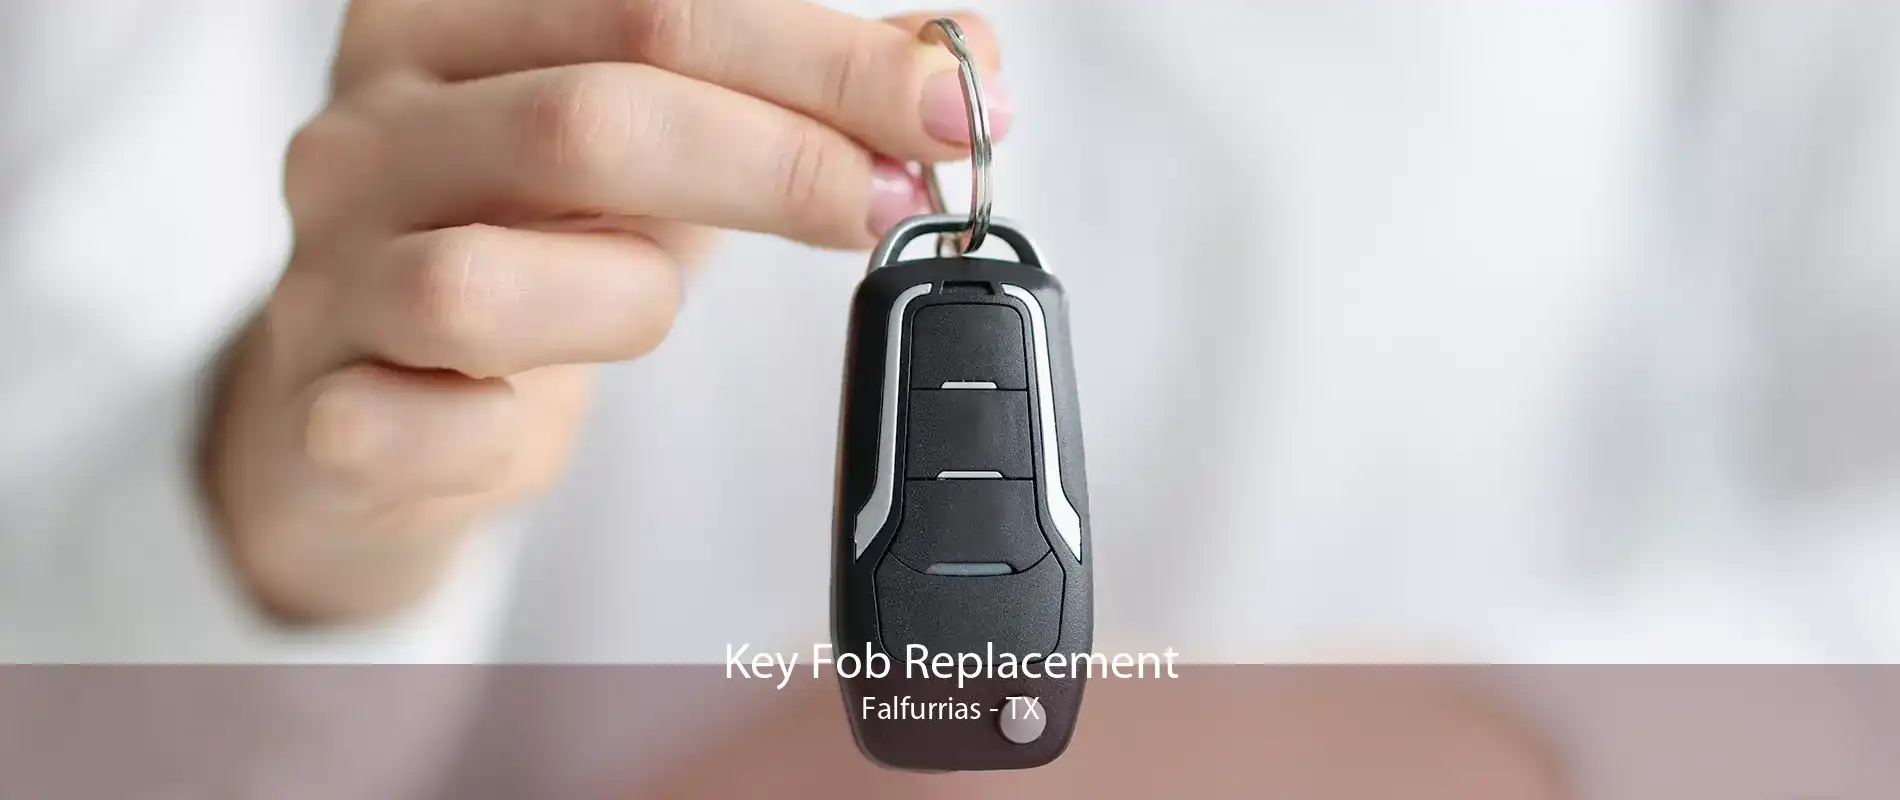 Key Fob Replacement Falfurrias - TX